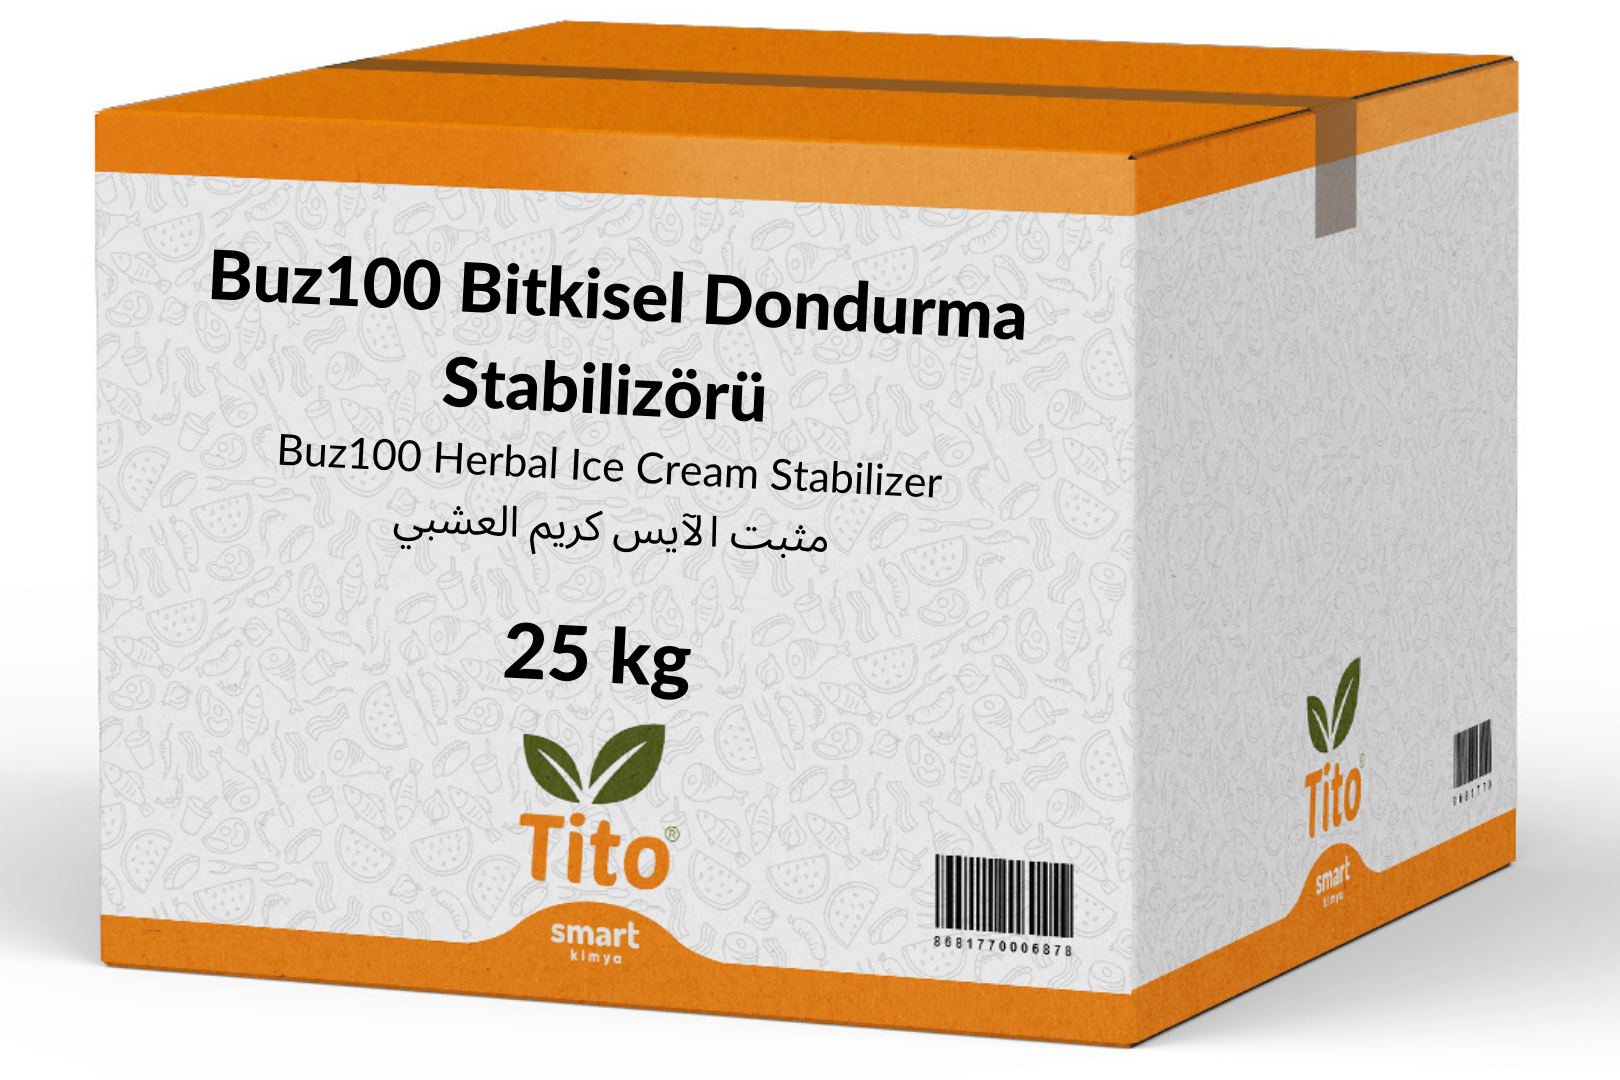 Buz100 Bitkisel Dondurma Stabilizörü 25 kg